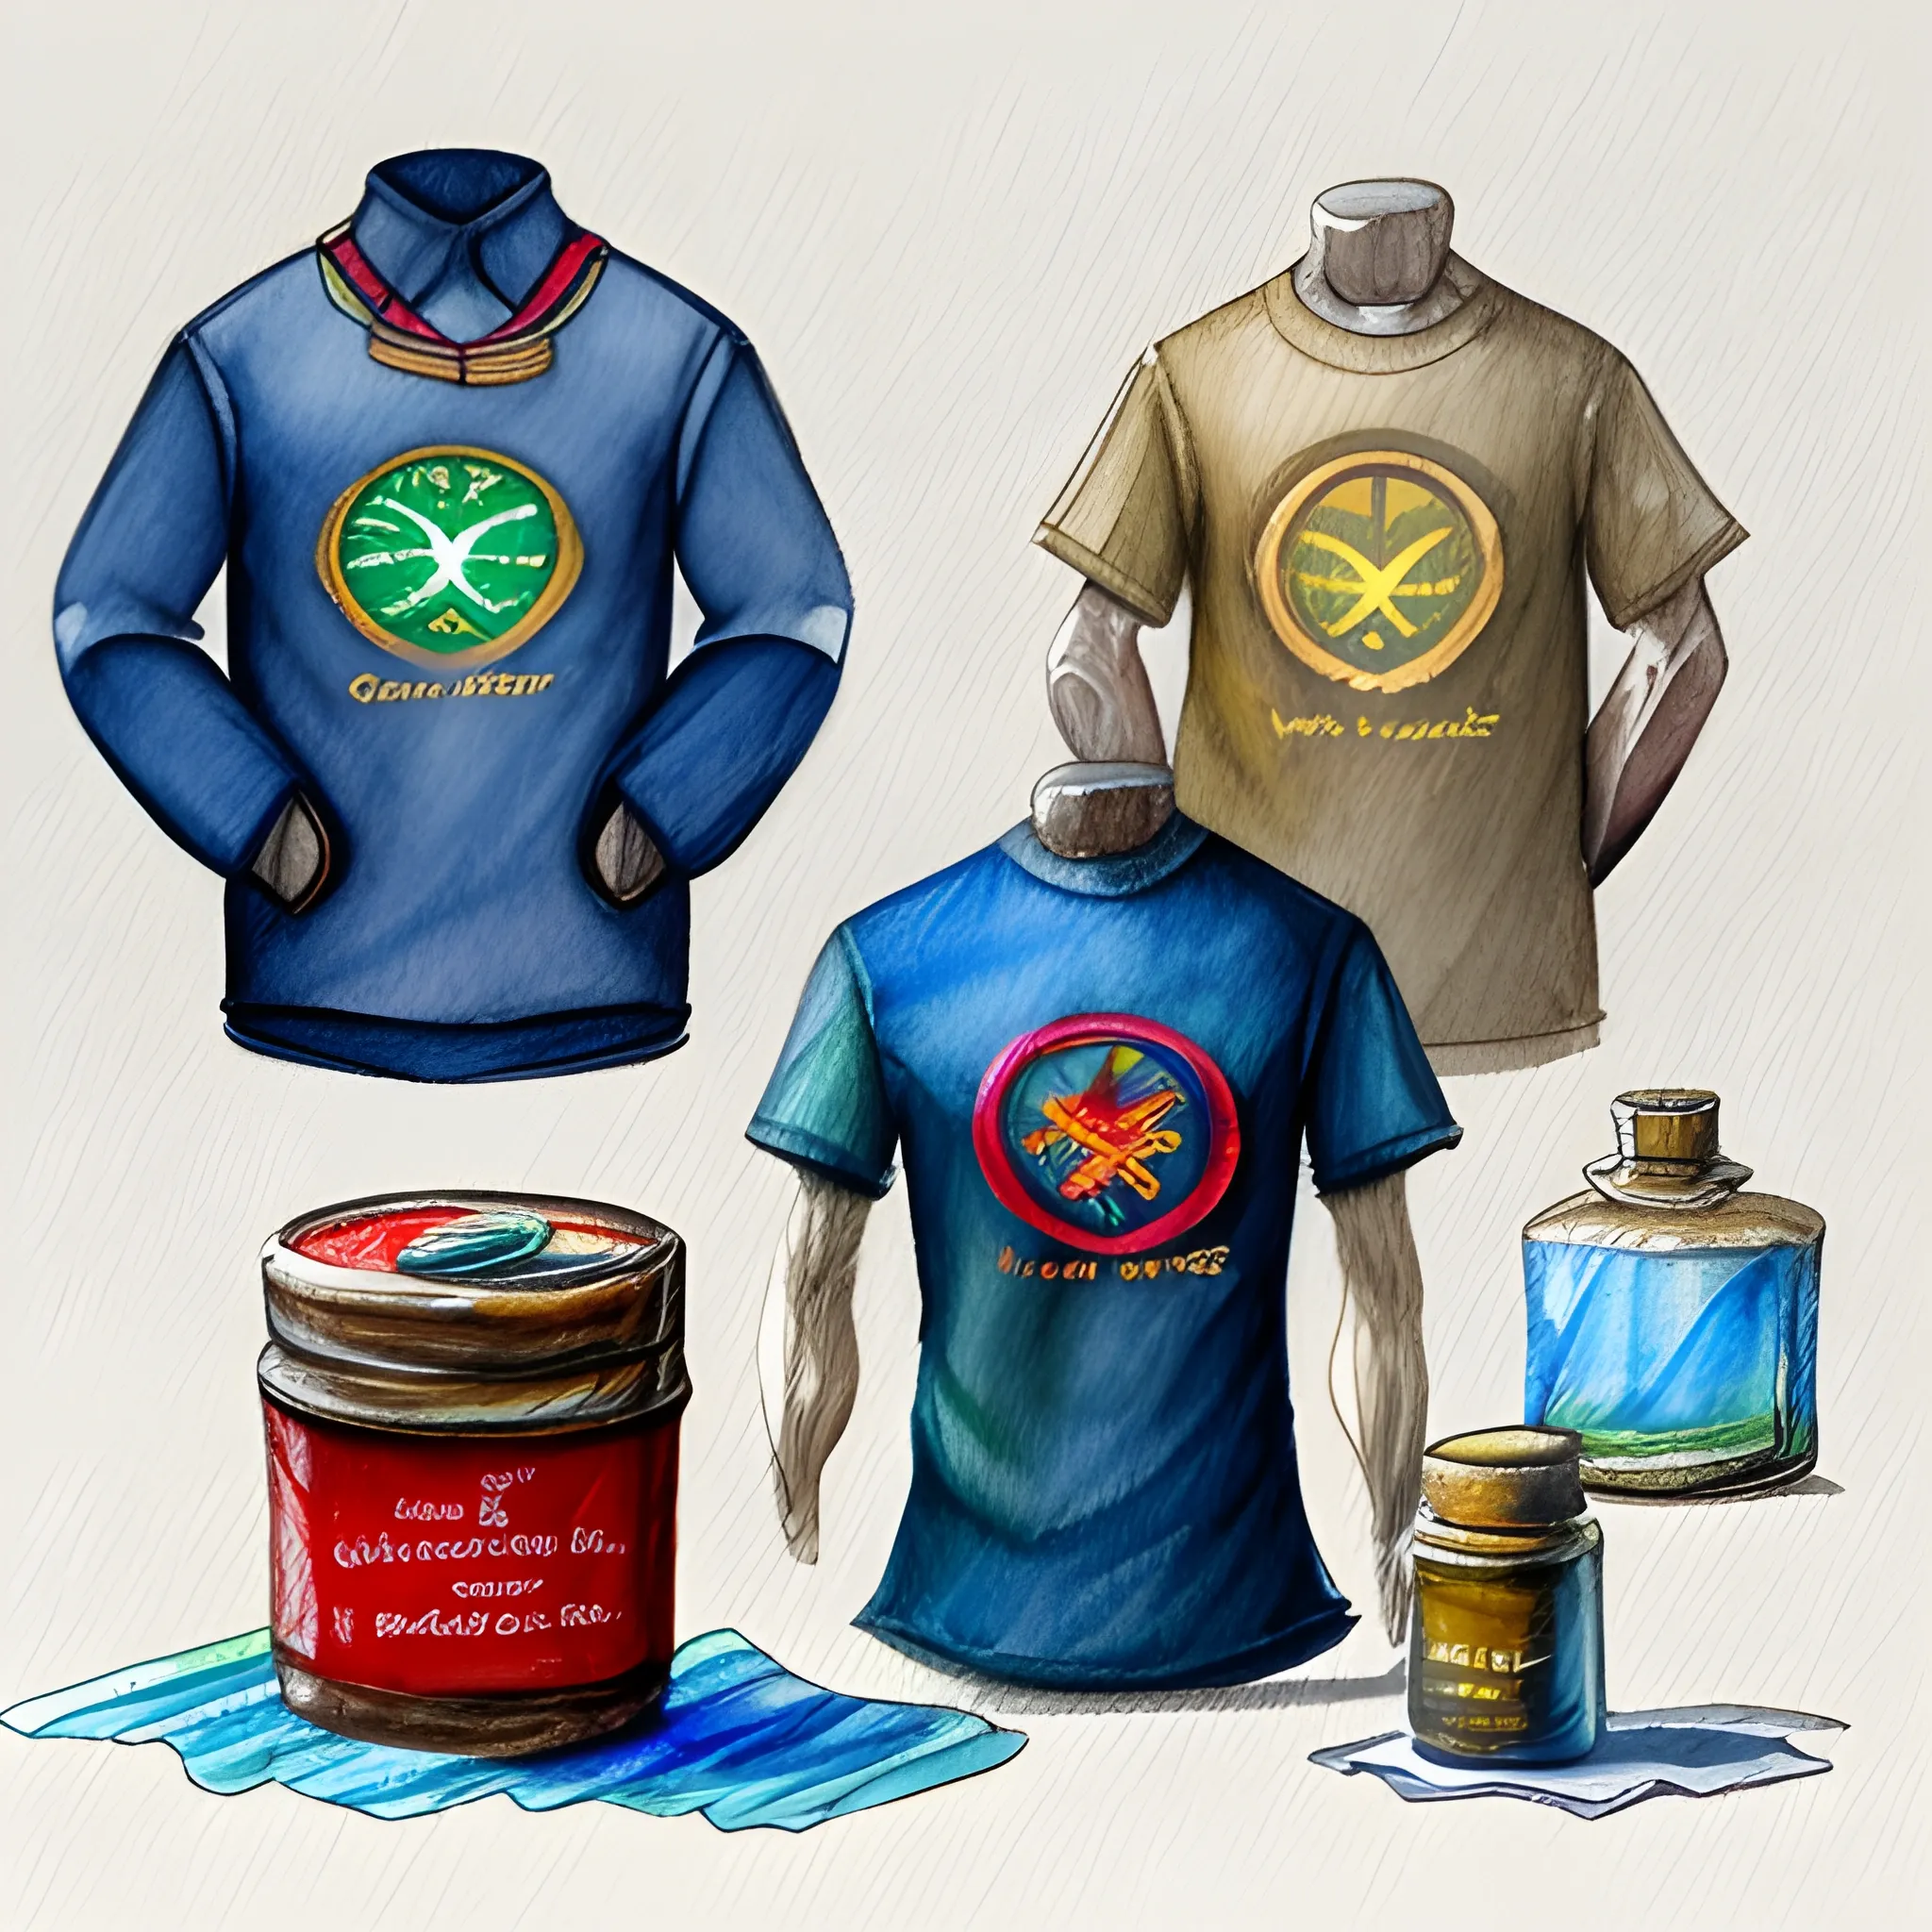 Clothes, Water Color, emblem, Oil Painting, Cartoon, 3D, Pencil Sketch, logo.